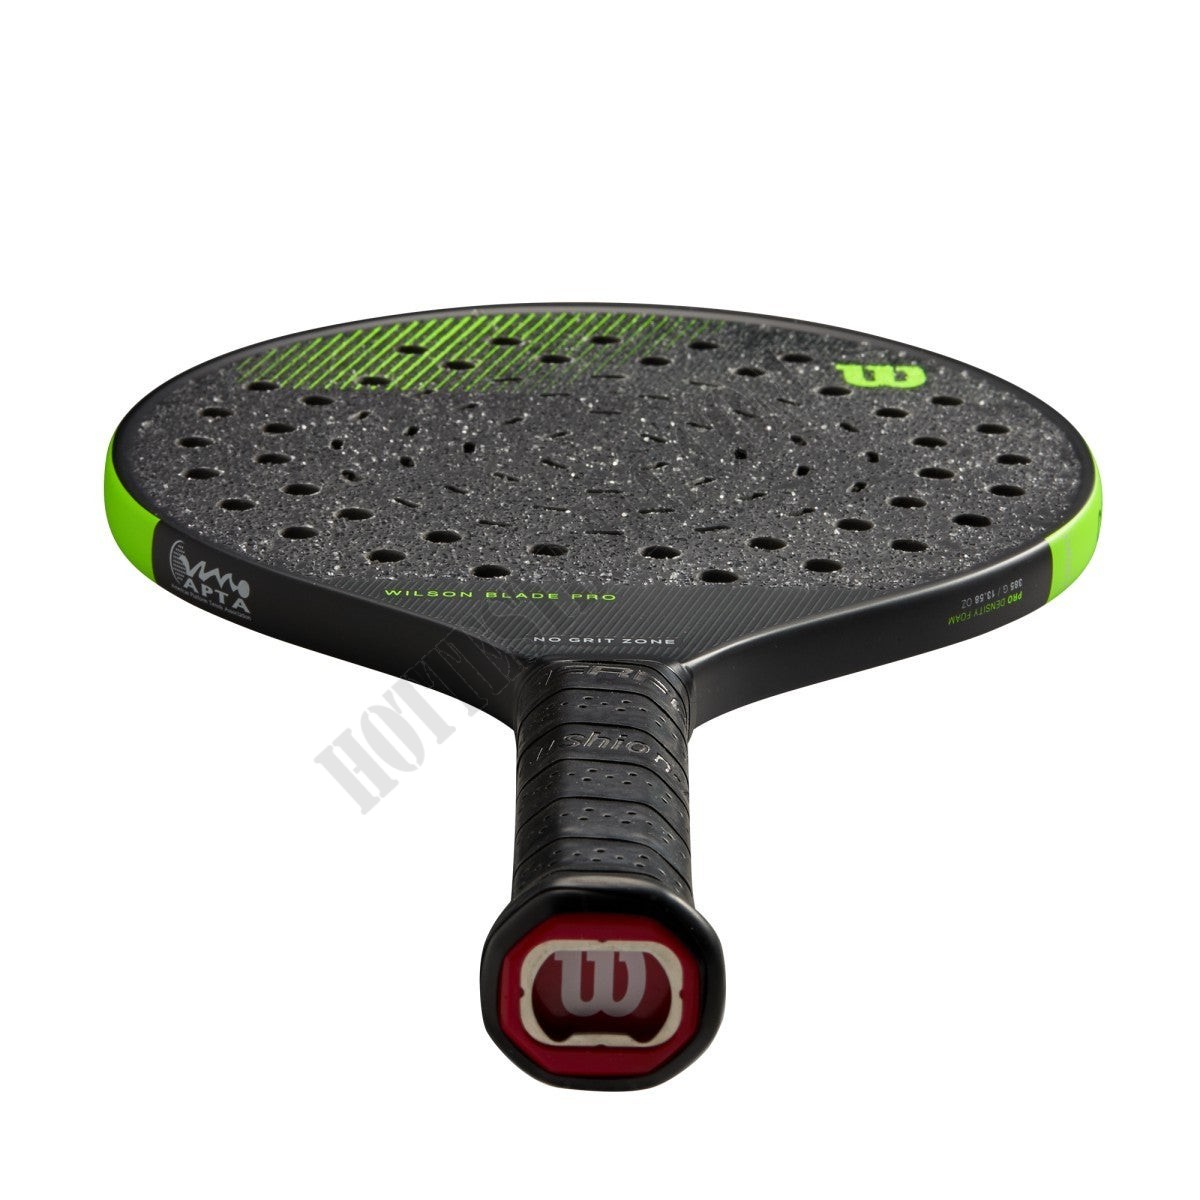 Blade Pro GRUUV Platform Tennis Paddle - Wilson Discount Store - -3